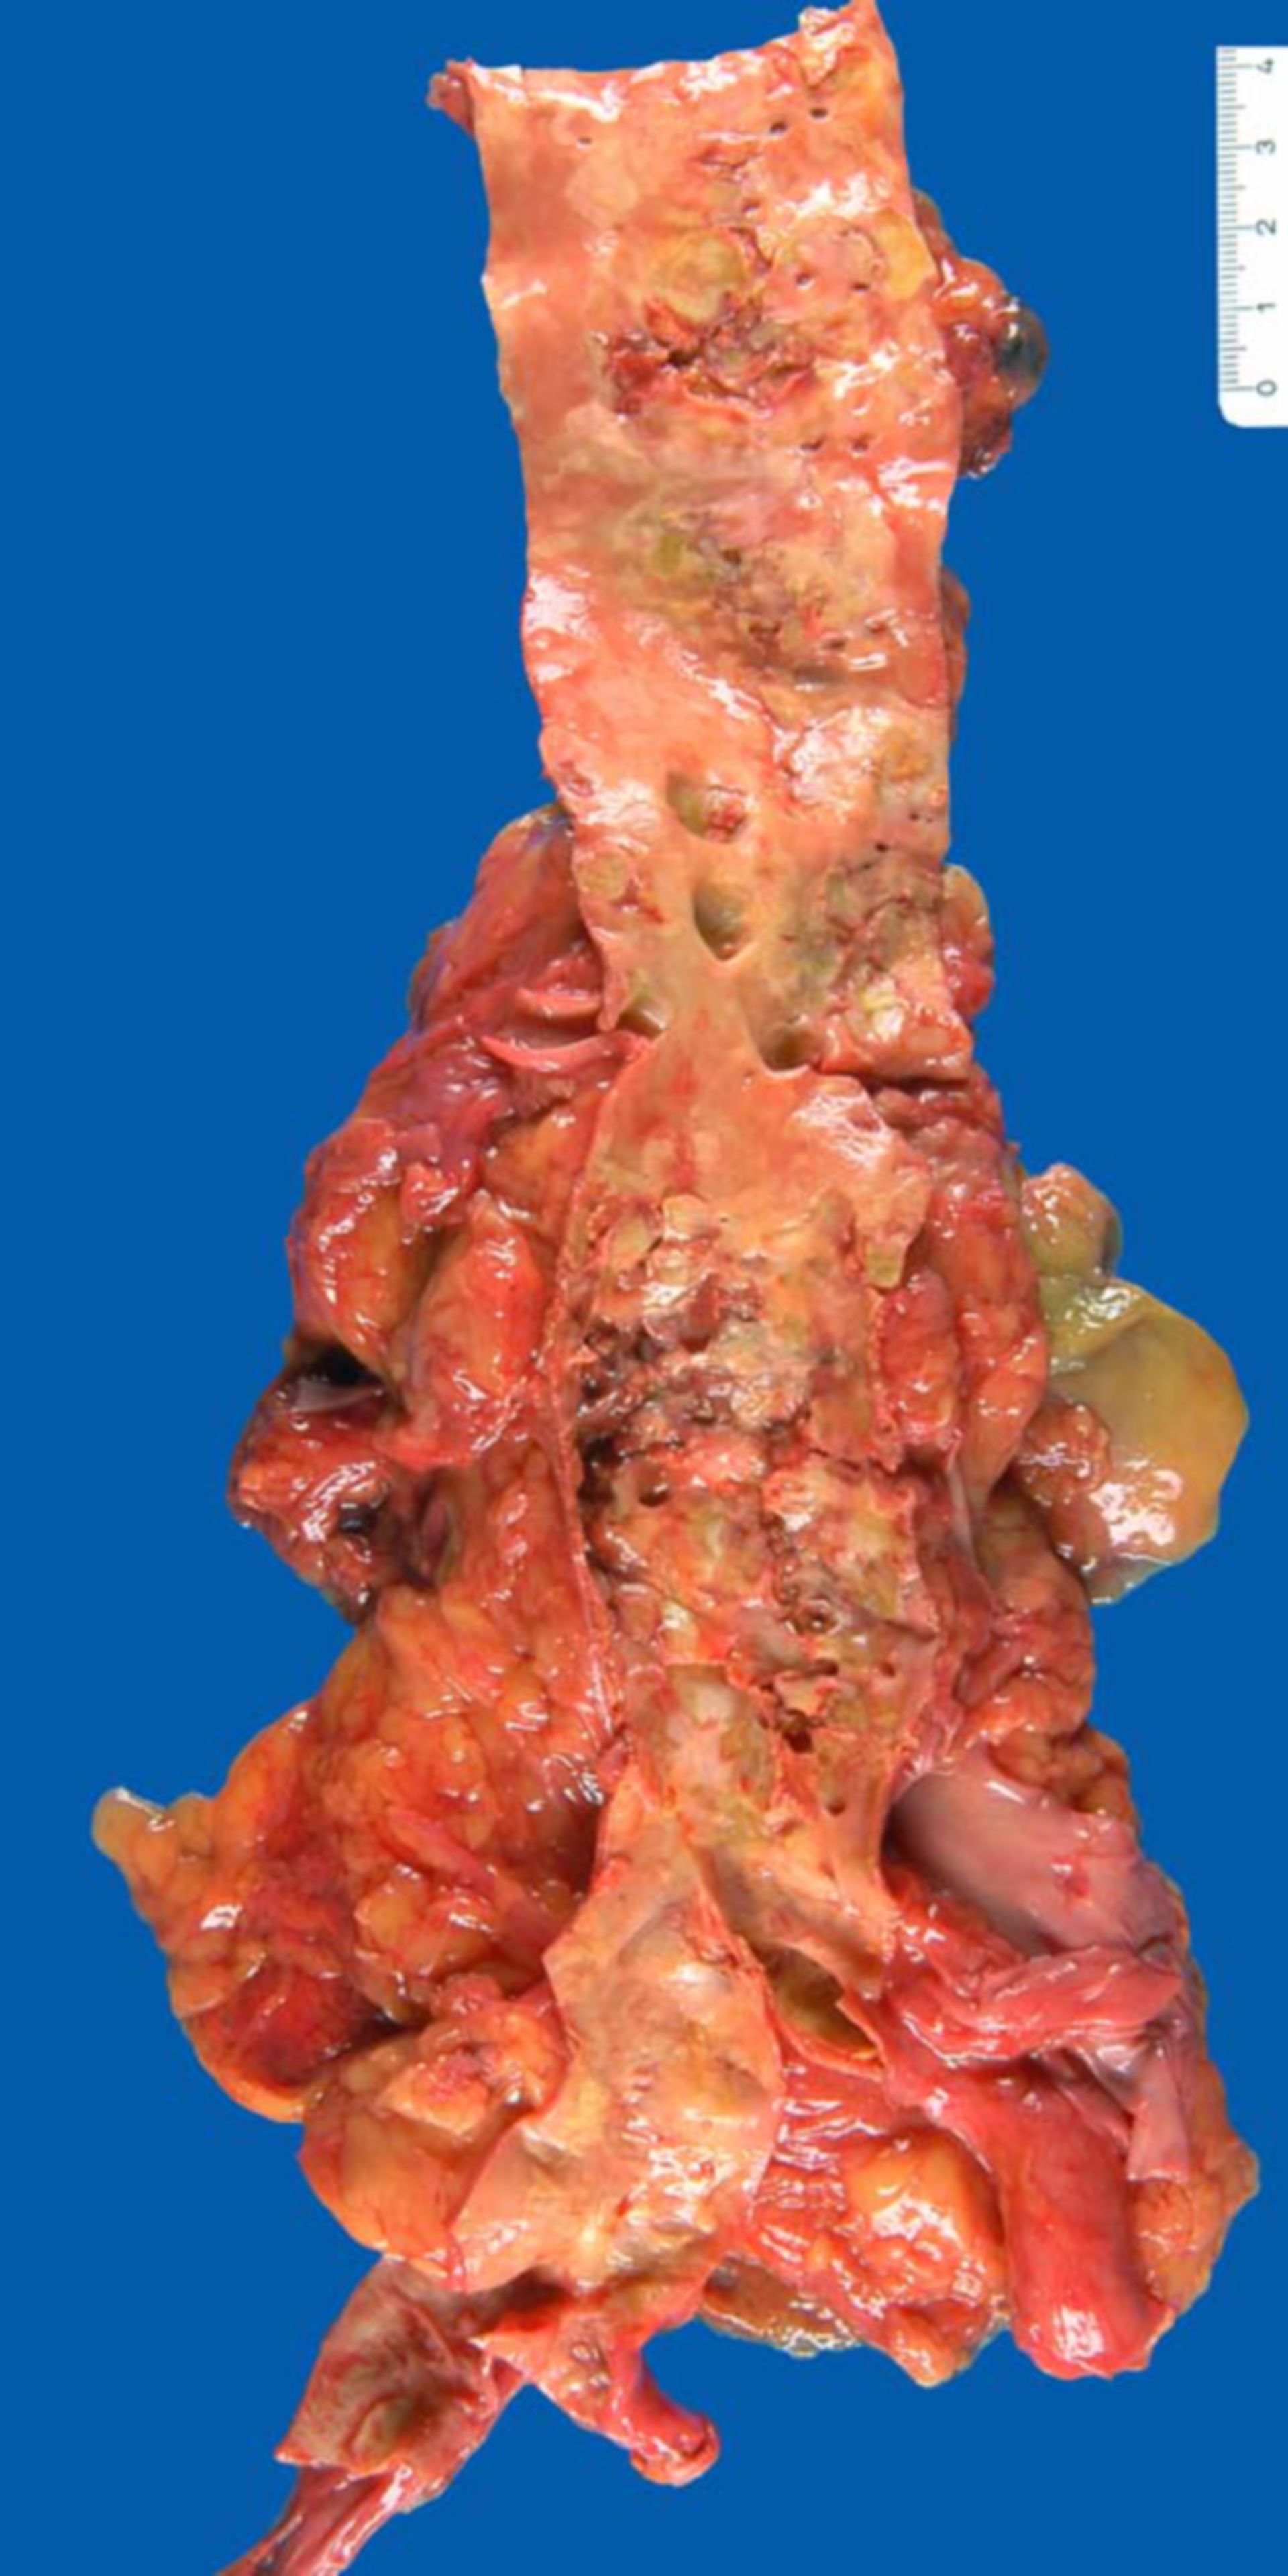 Atherosclerosis of the aorta